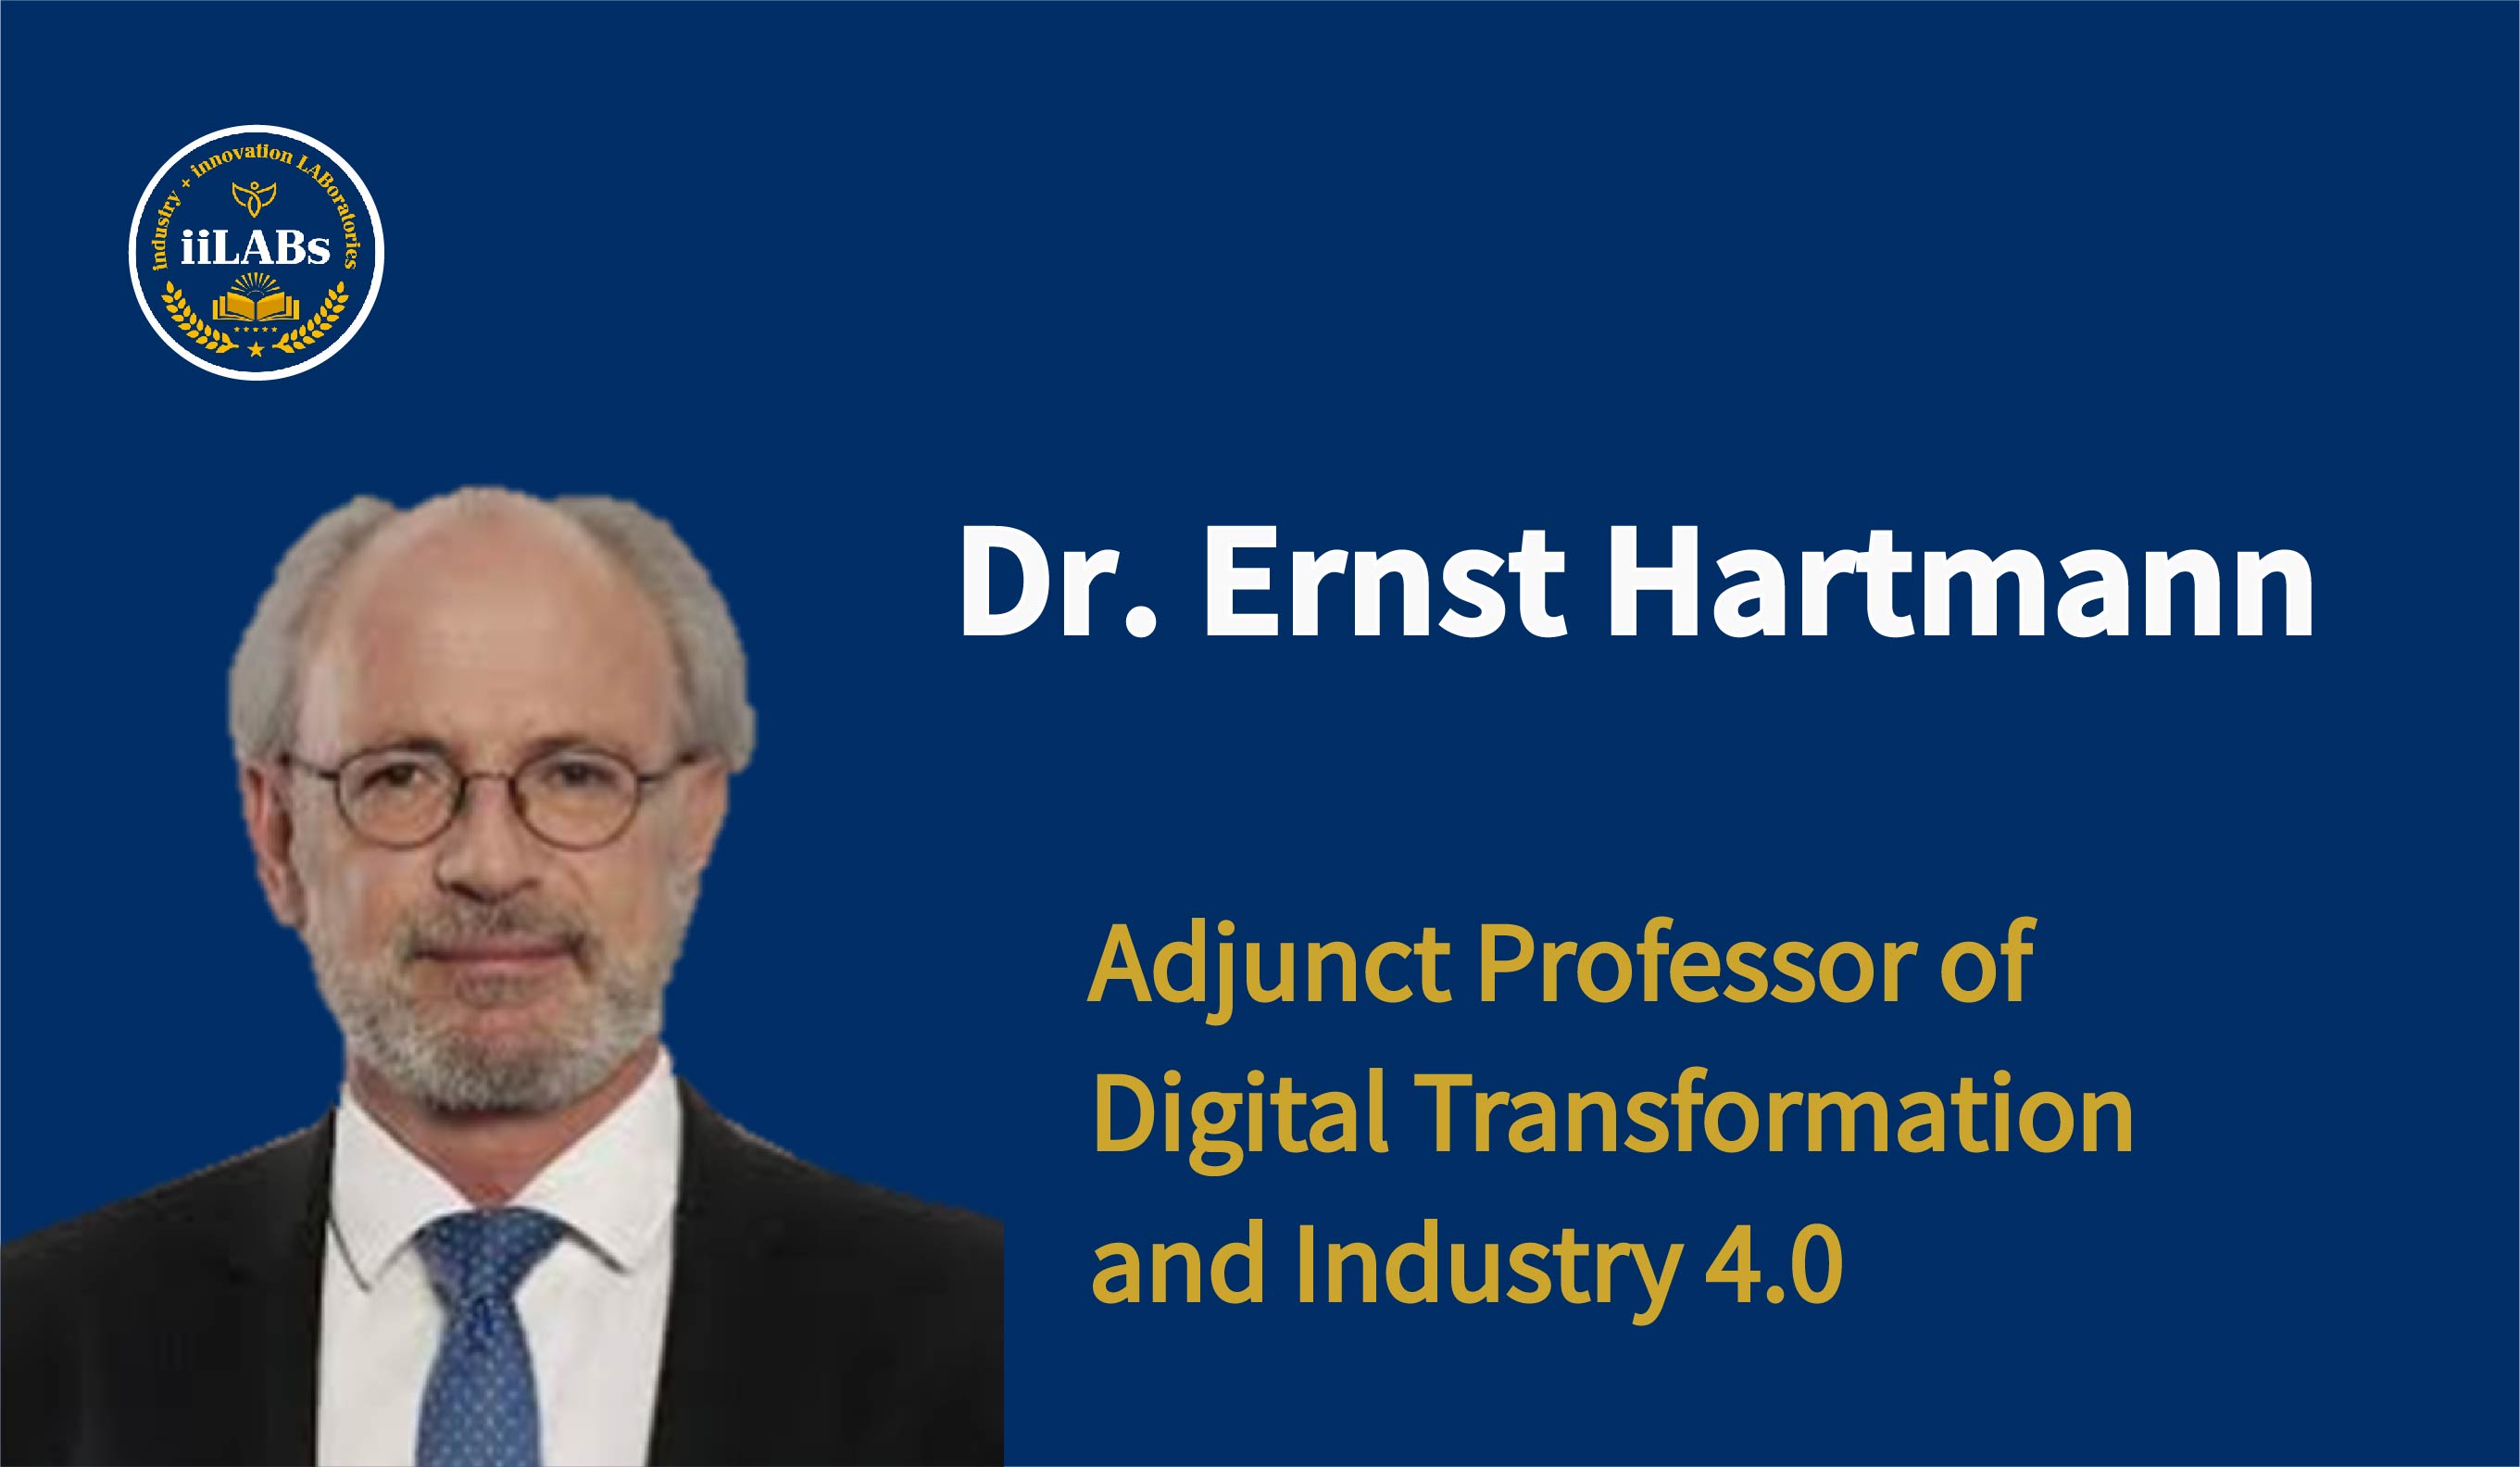 Dr. Ernst Hartmann, Adjunct Professor of Digital Transformation and Industry 4.0